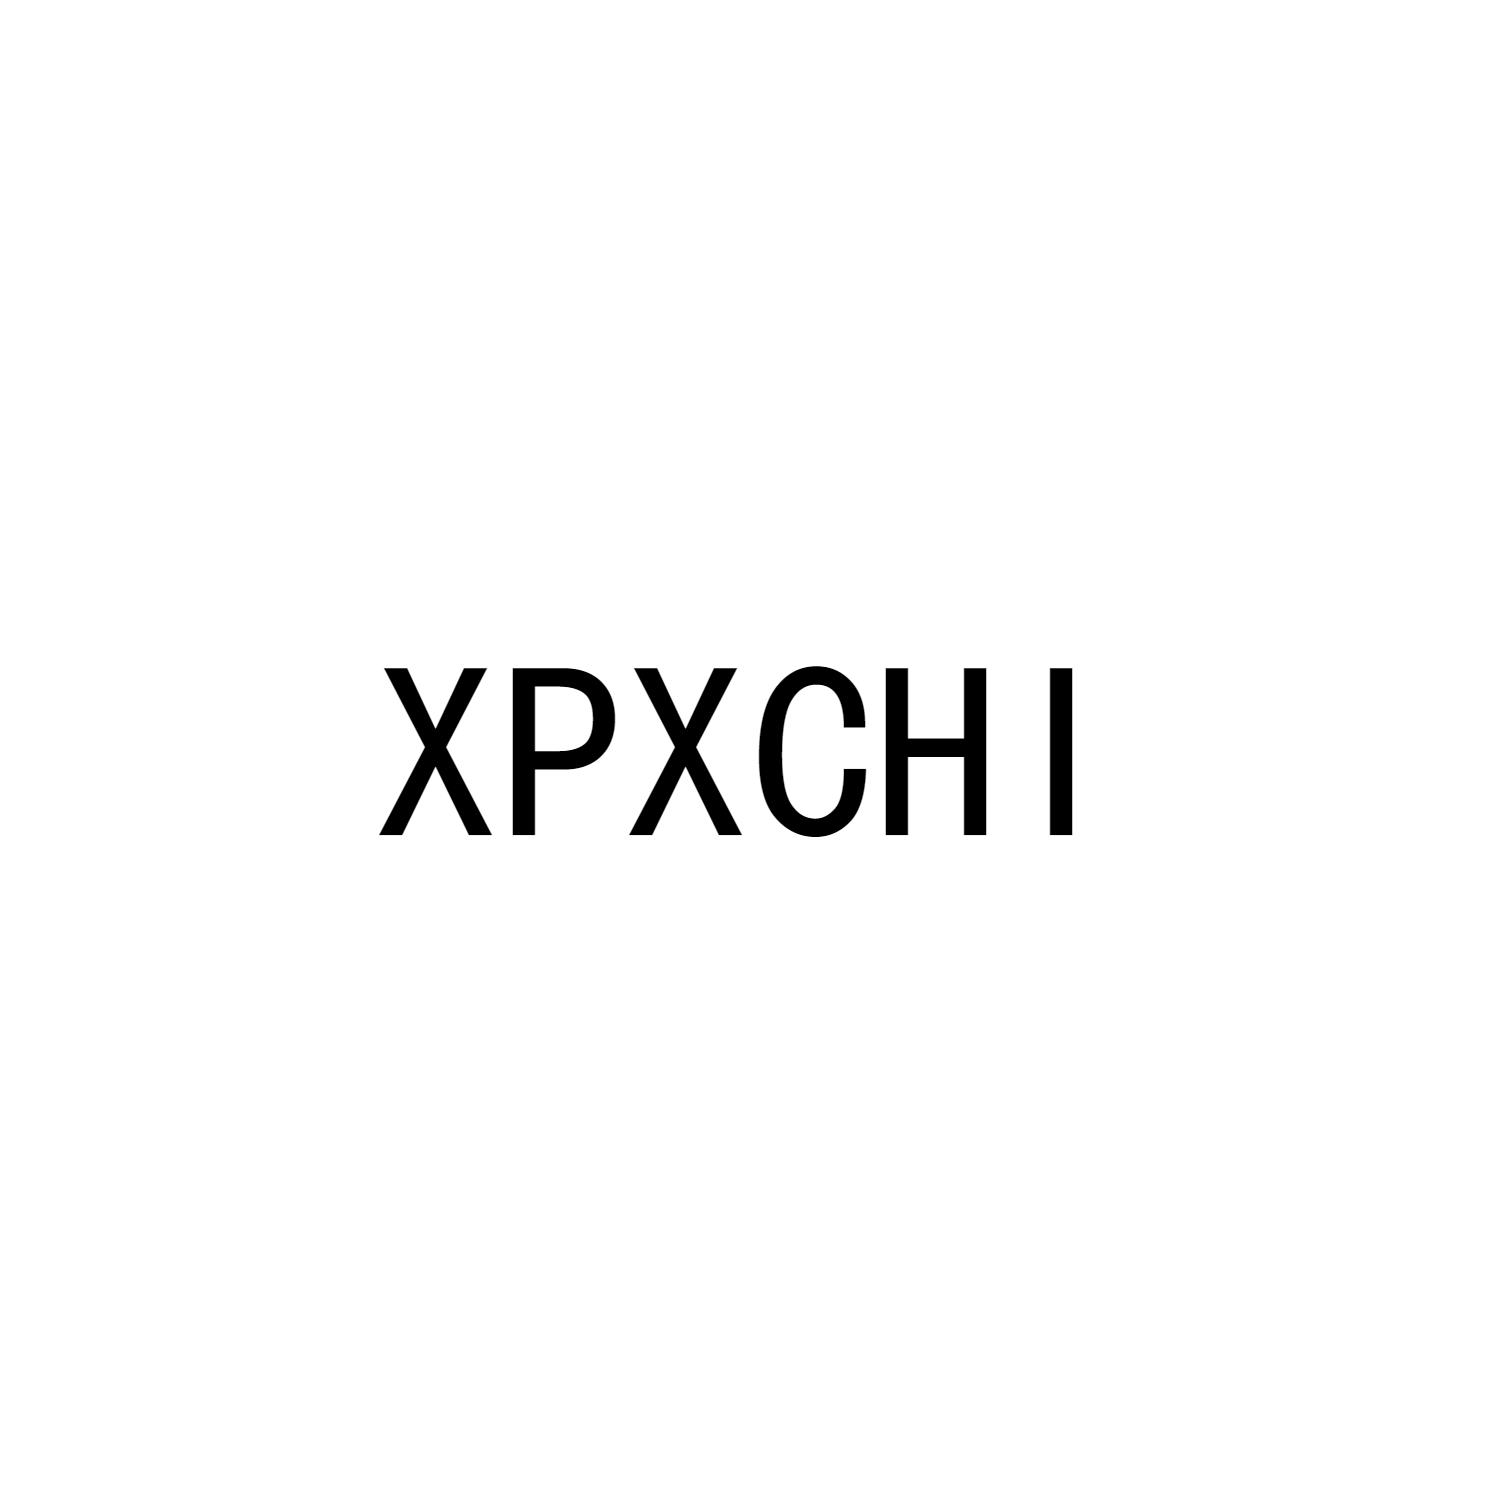 XPXCHI